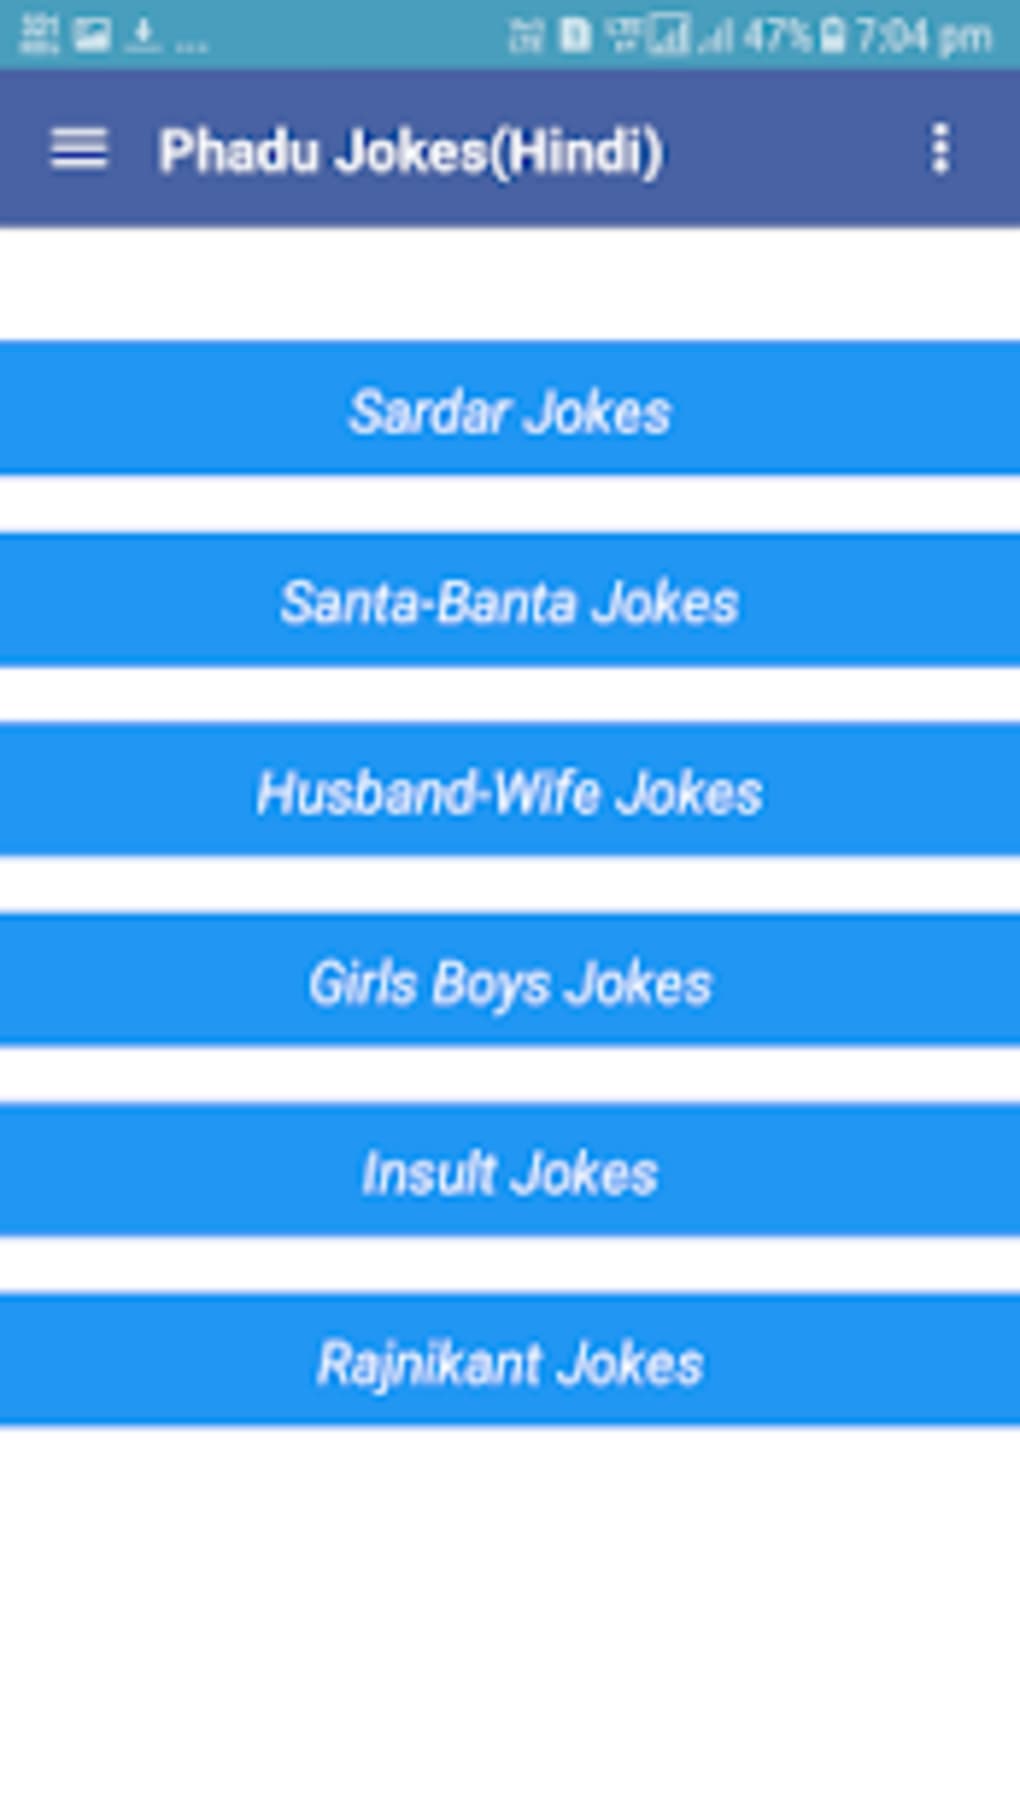 Hindi Jokes APK for Android - Download